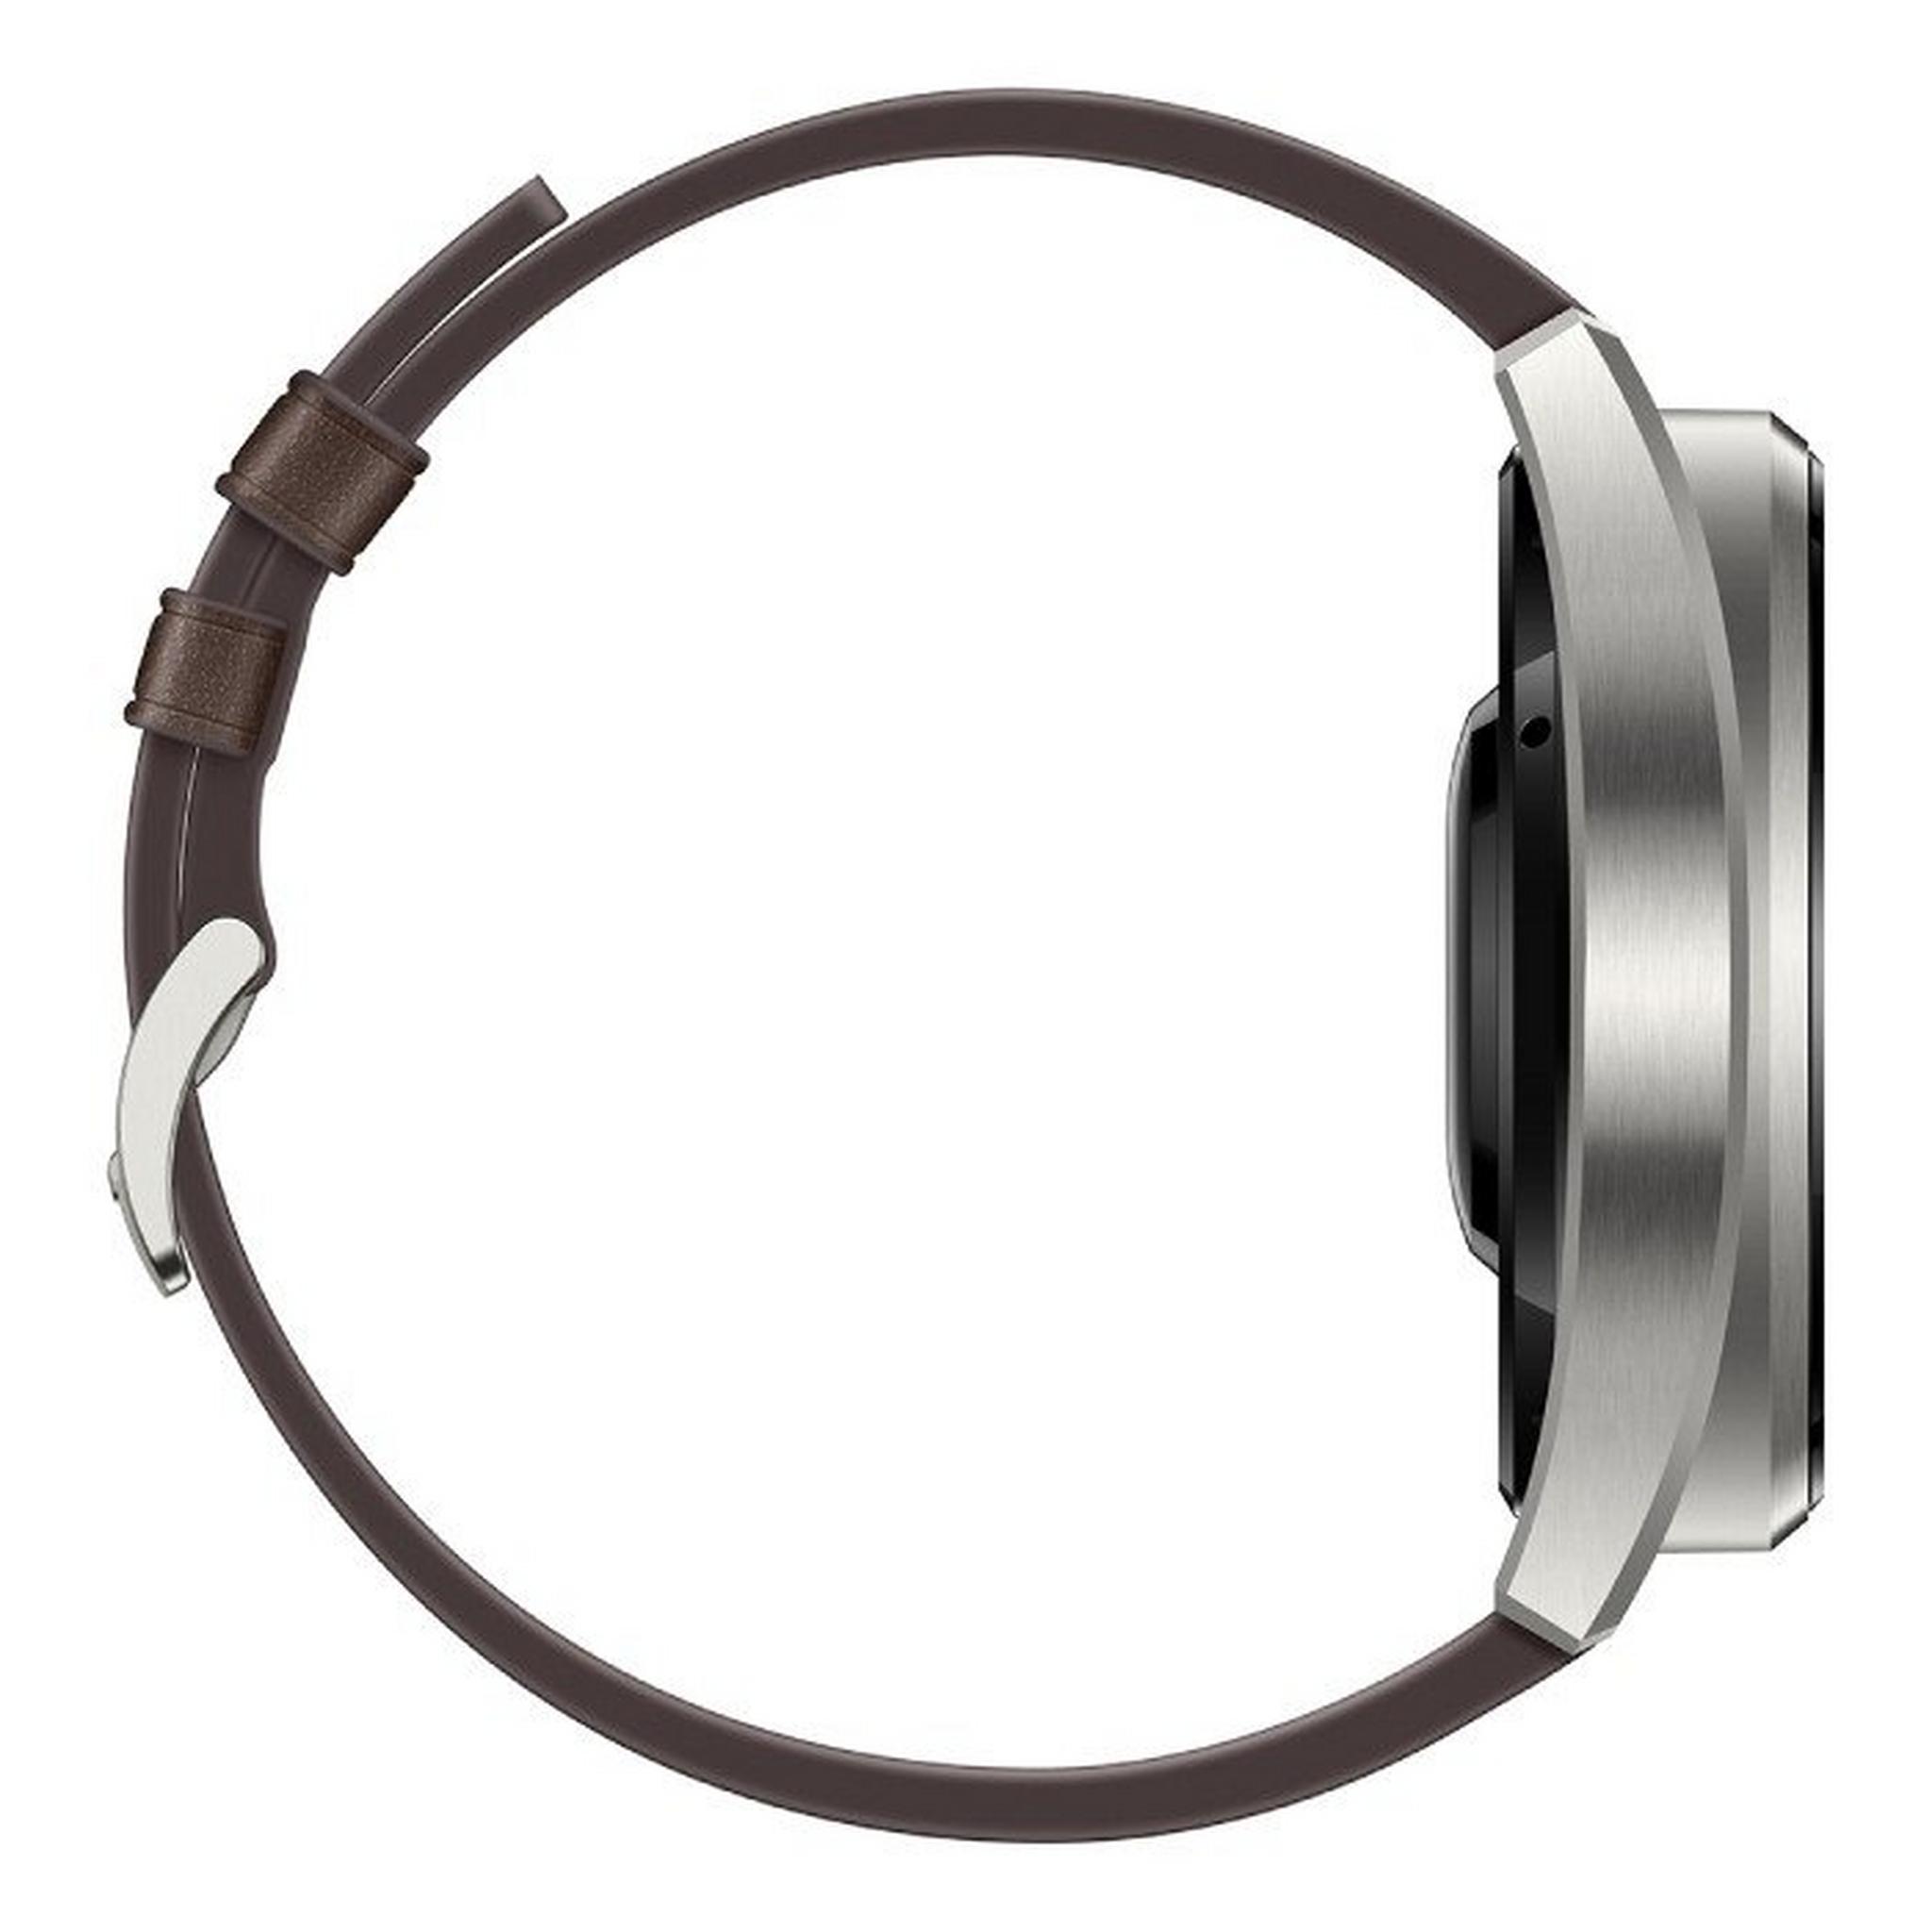 Huawei 48mm Watch 3 Pro - Dark Brown